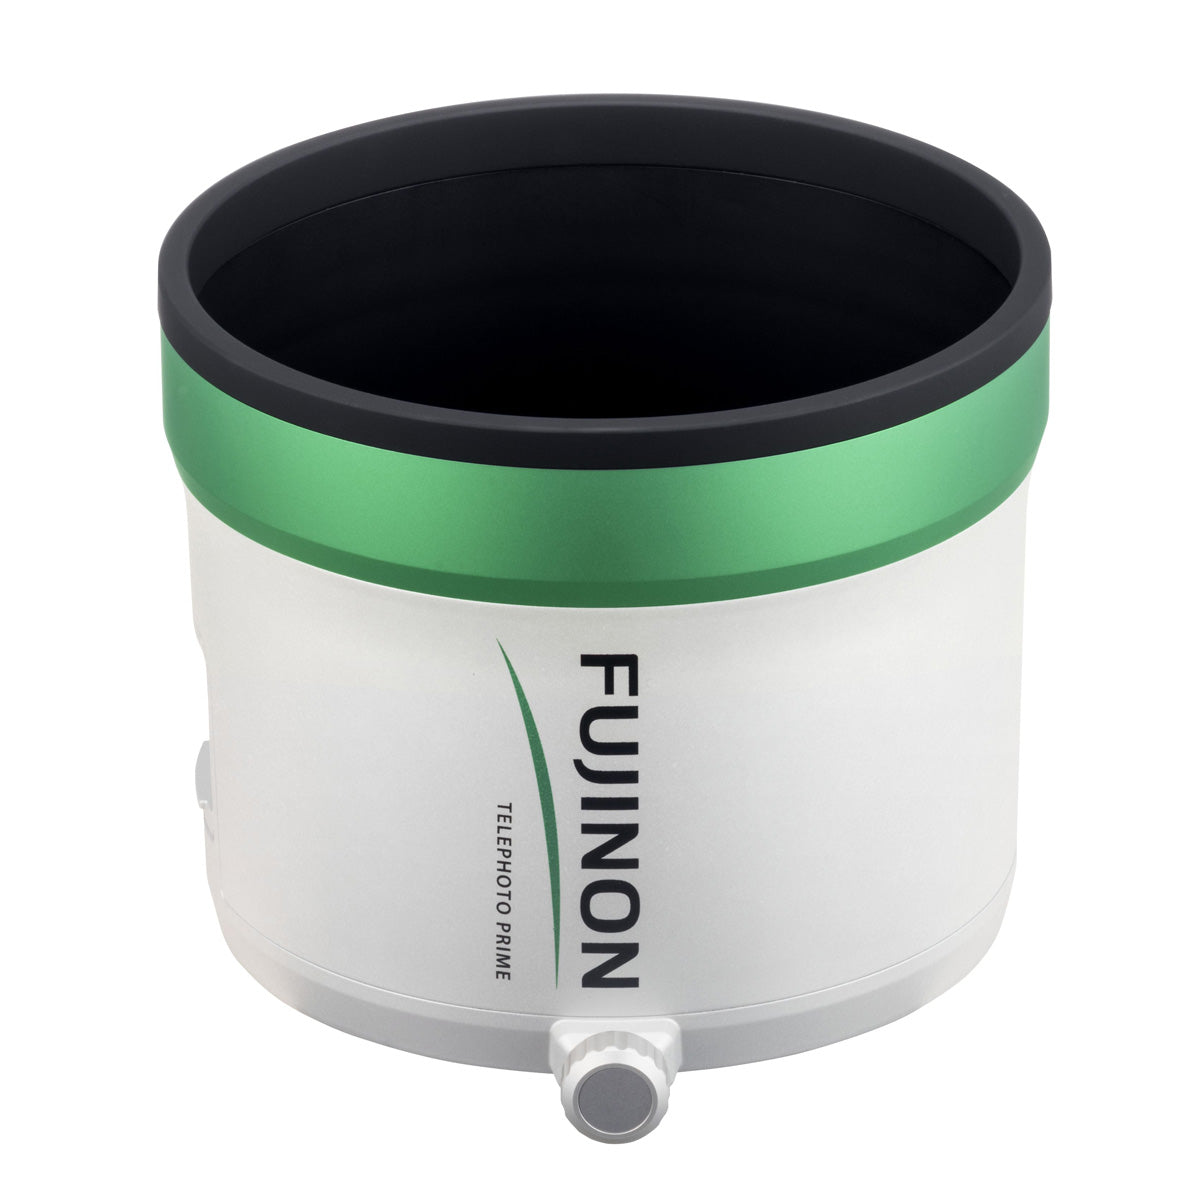 Fujifilm XF 200mm F2 R LM OIS WR Lens with XF 1.4x TC F2 Teleconverter